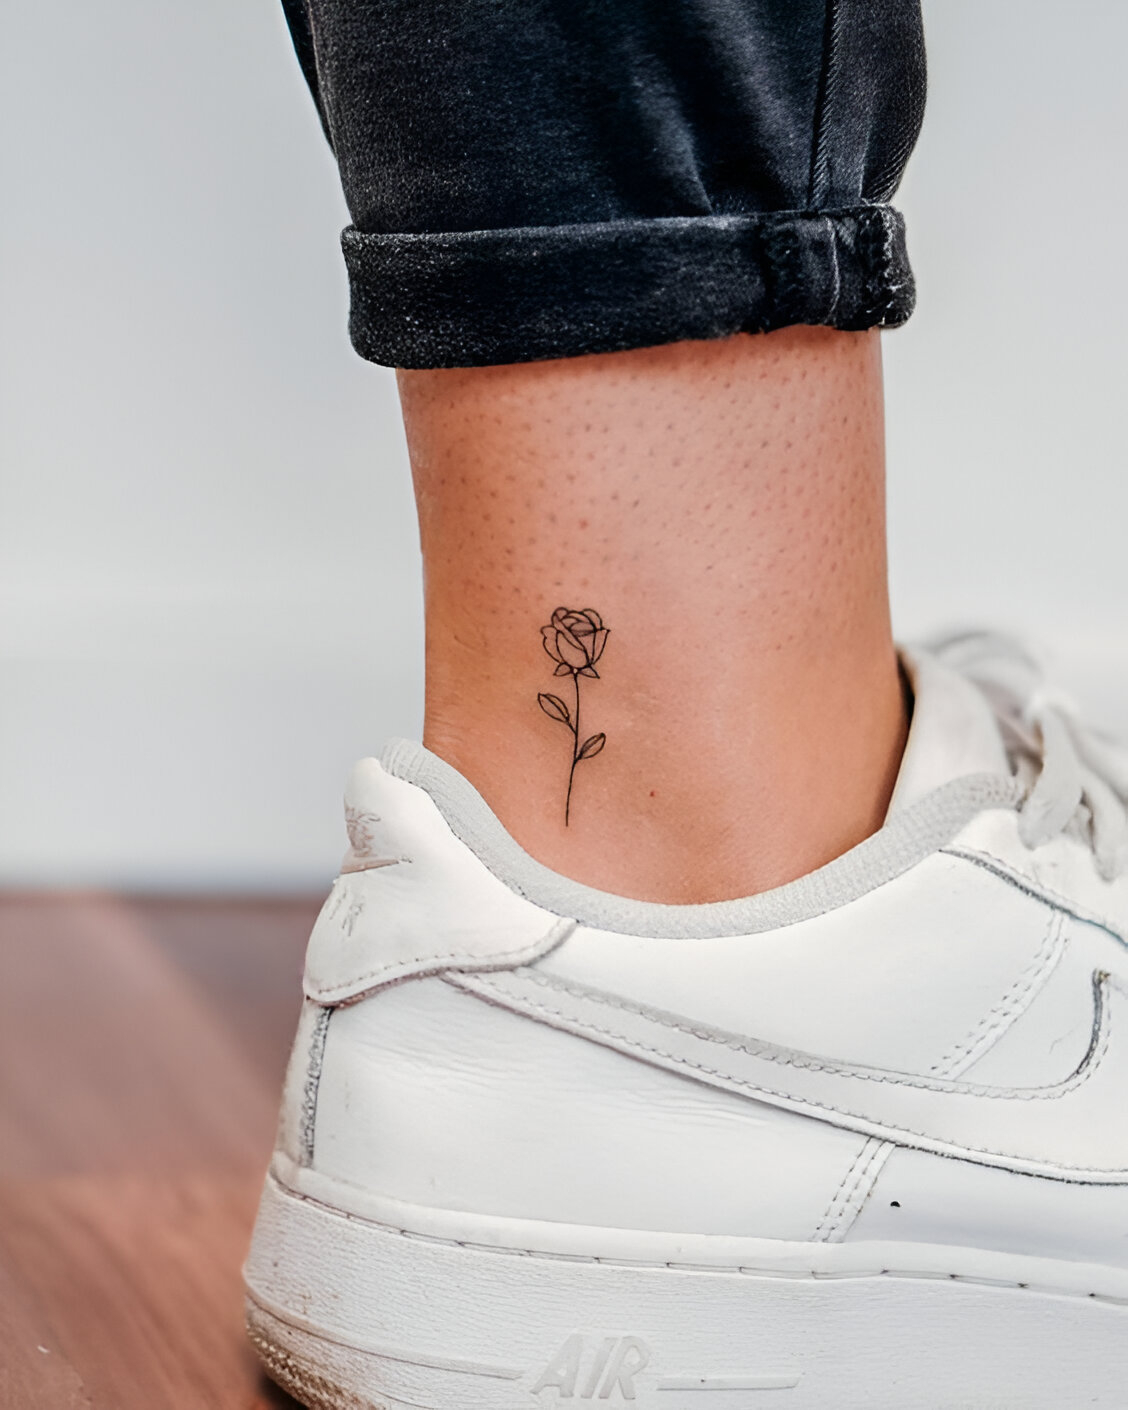 Mini Rose Ankle Tattoos For Women